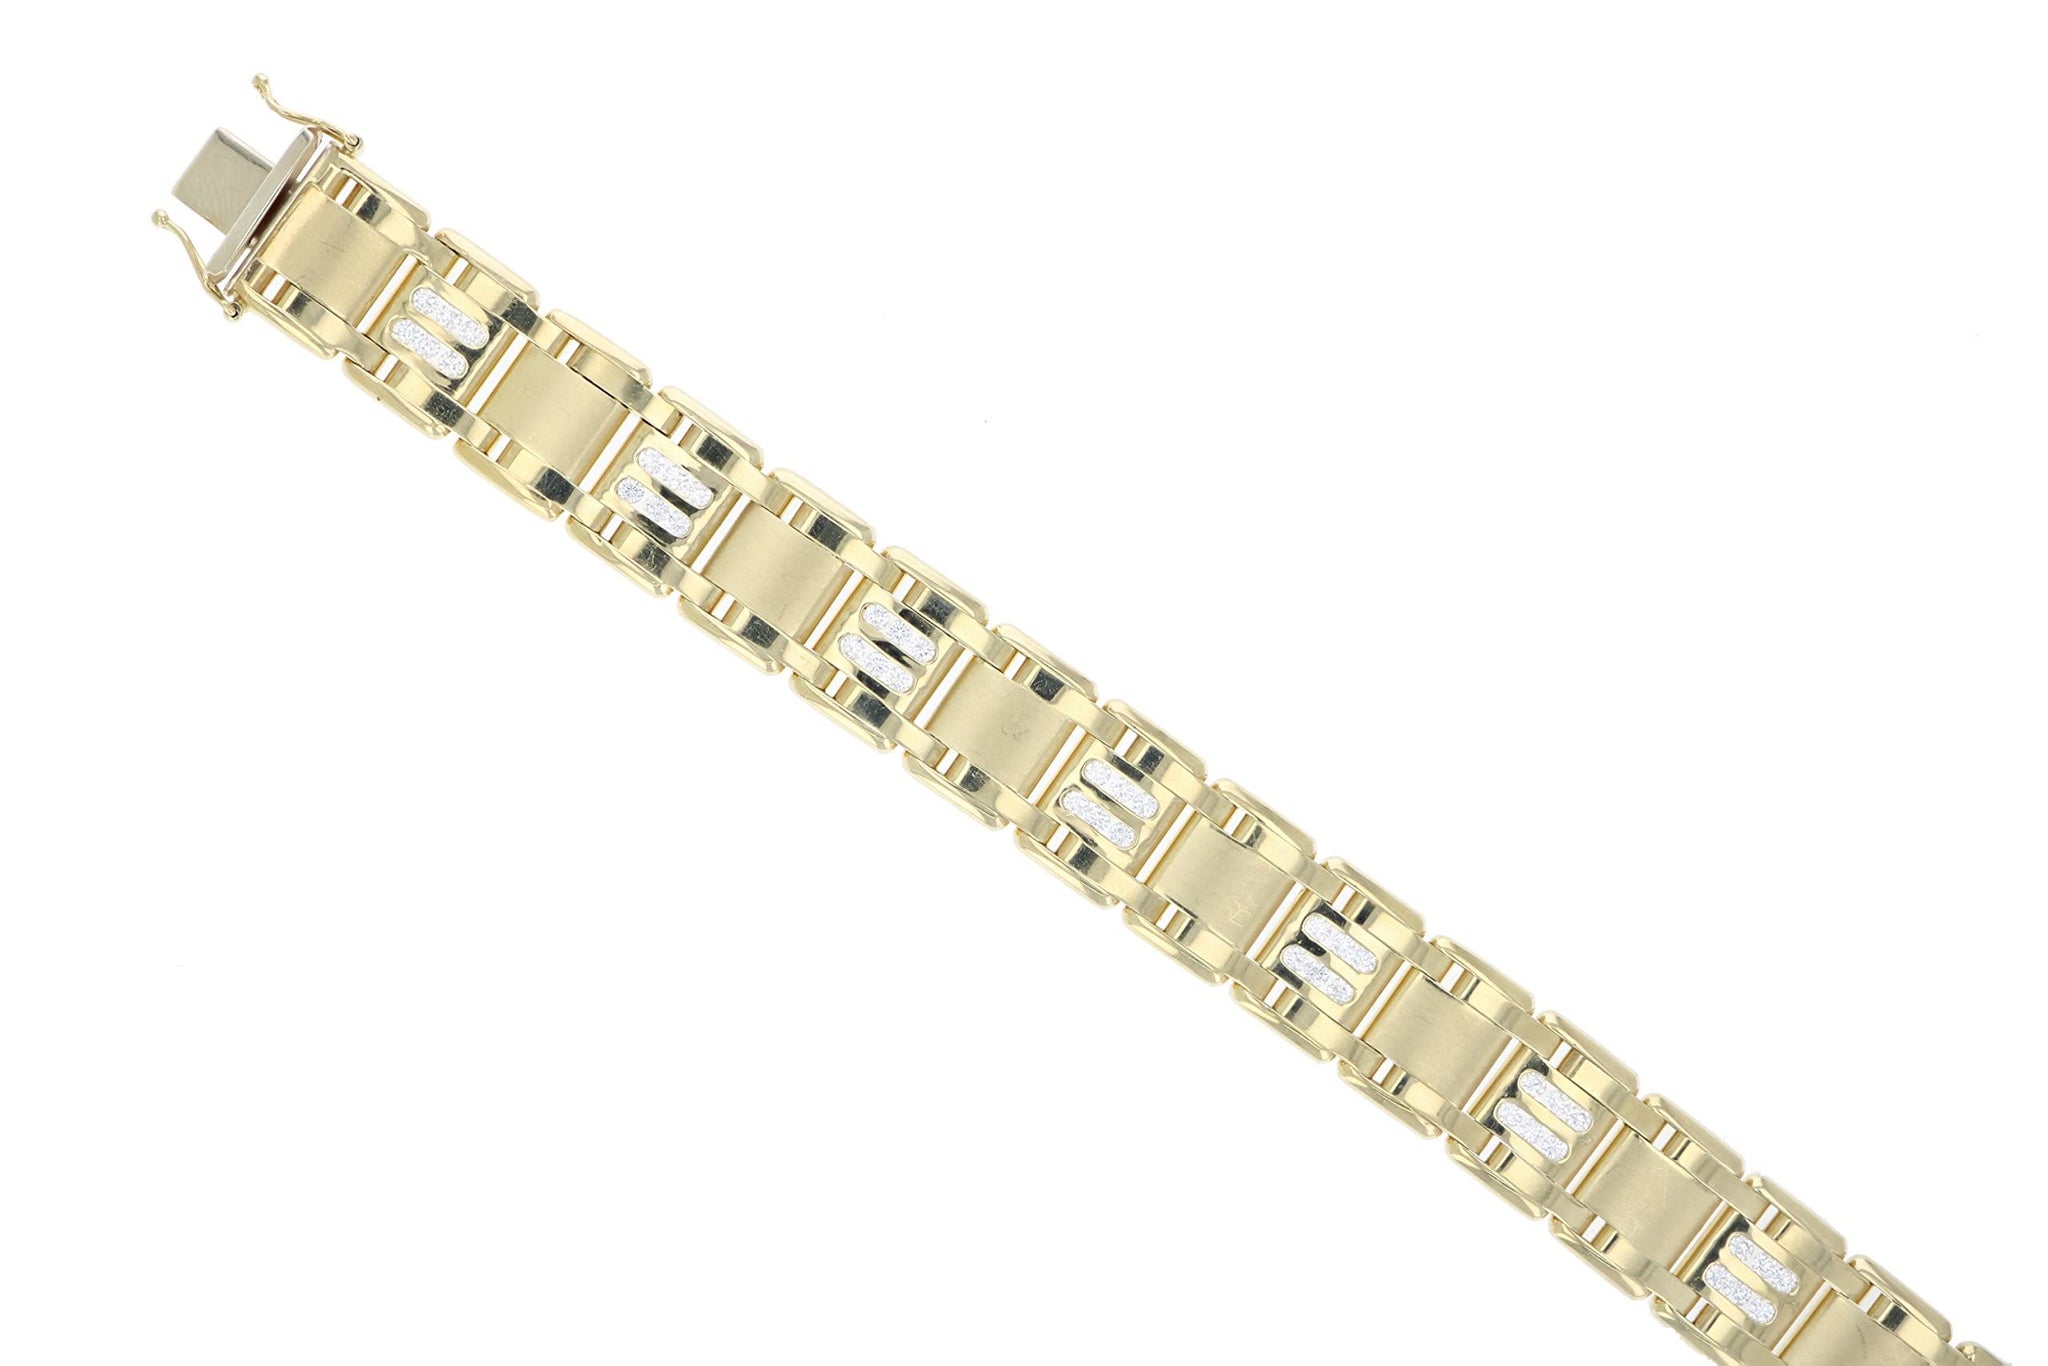 Circa 1950 - 1970 18K Italian Gold bracelet – Pippin Vintage Jewelry